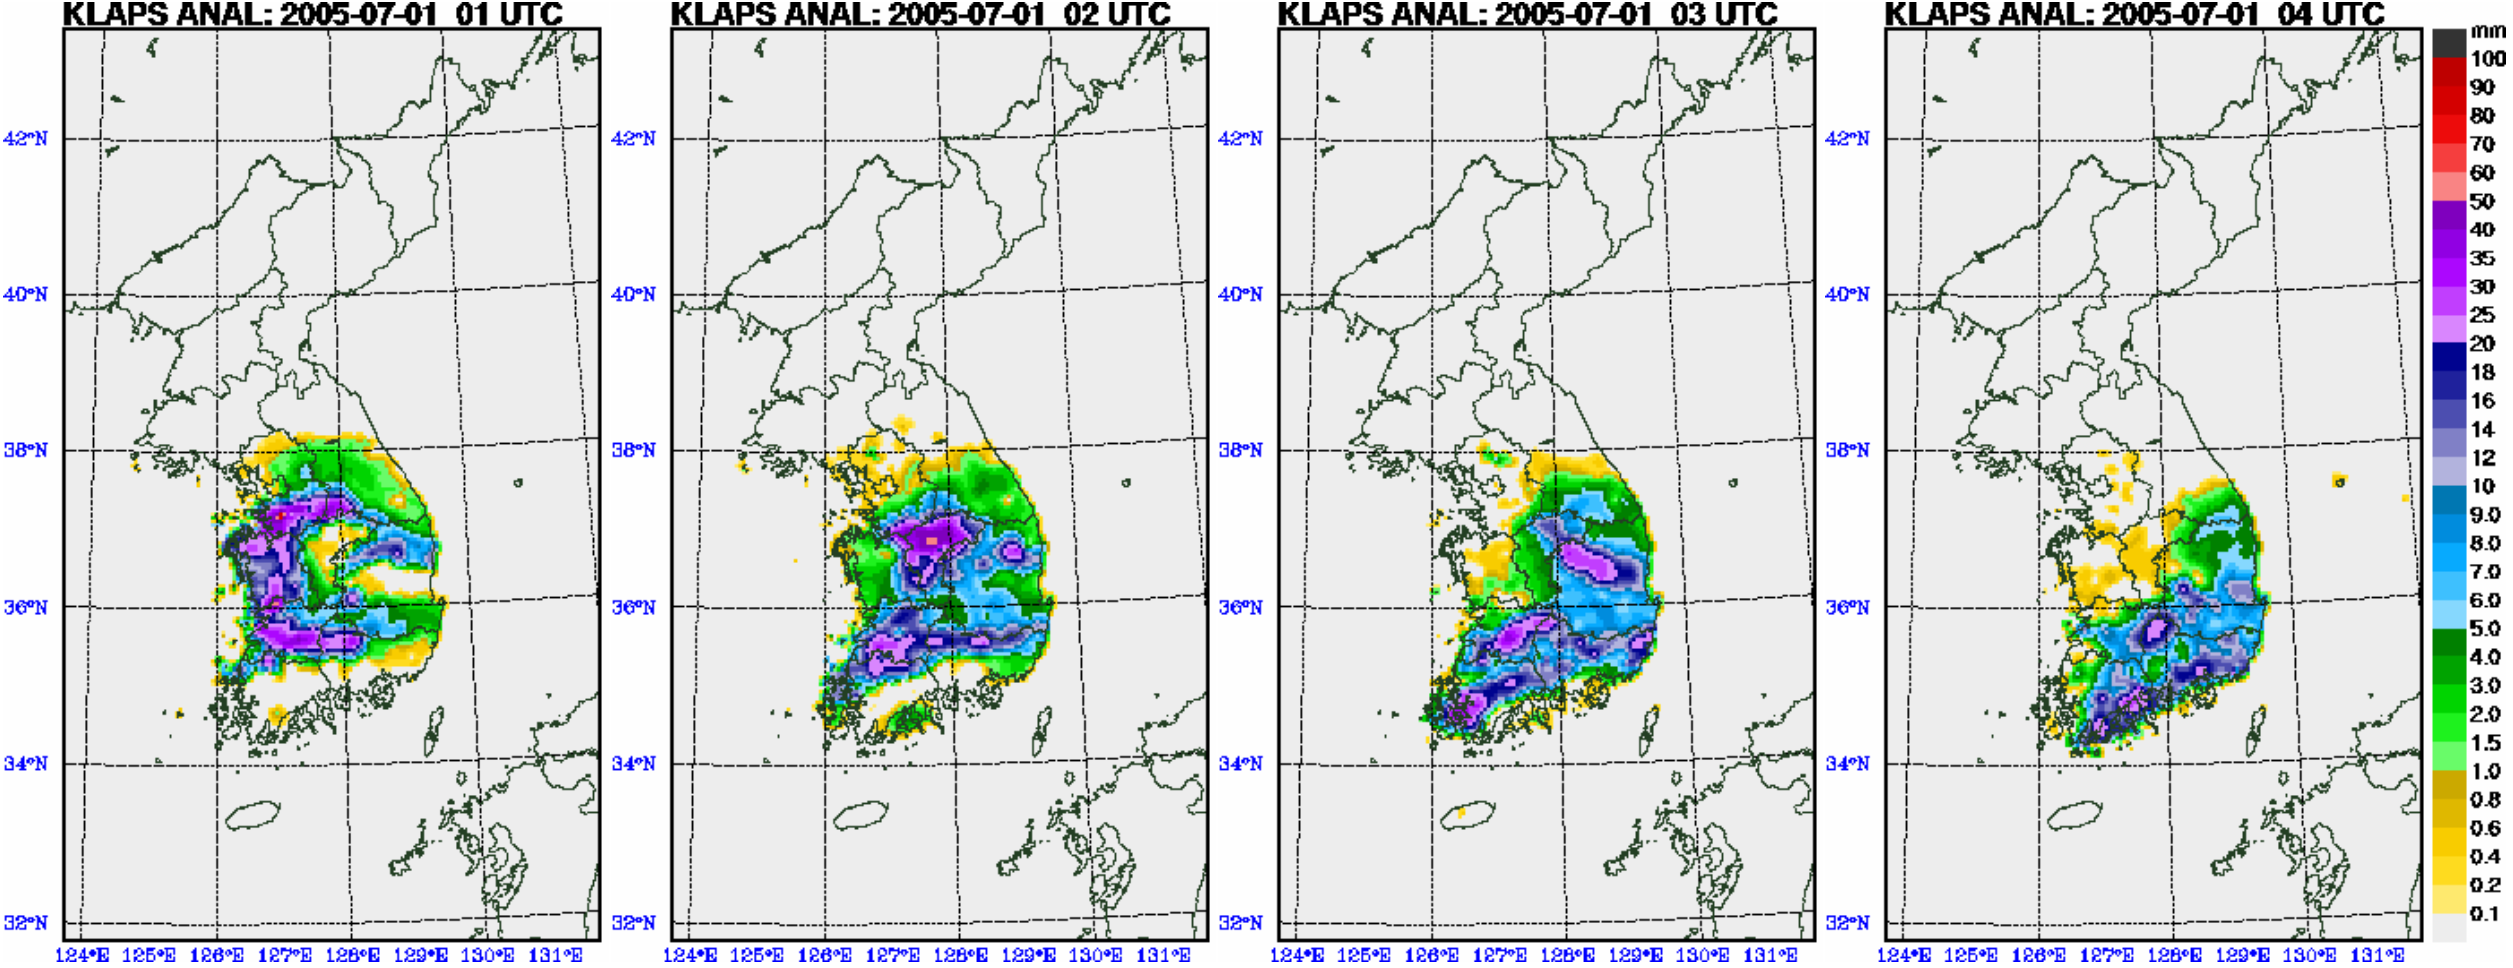 Fig. 2.2.3.3. Hourly accumulated precipitation of KLAPS reanalysis from 01UTC to 04UTC 1 July 2005.